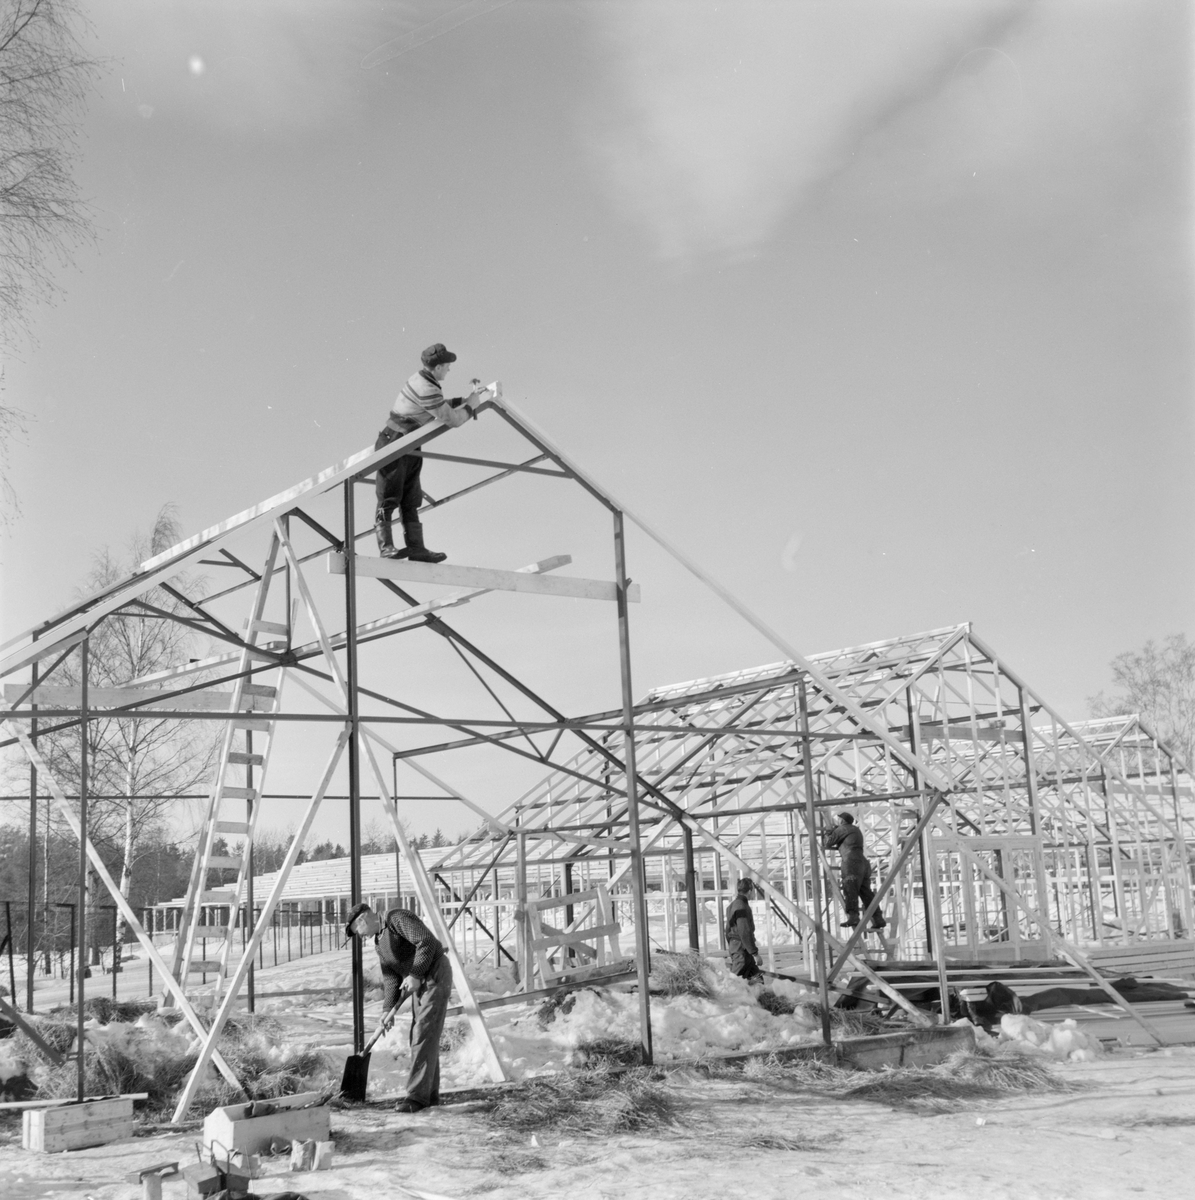 Norsk landbruks jubileumsutstilling 1959. Stillaser monteres til bruk under jubileumsutstillingen.